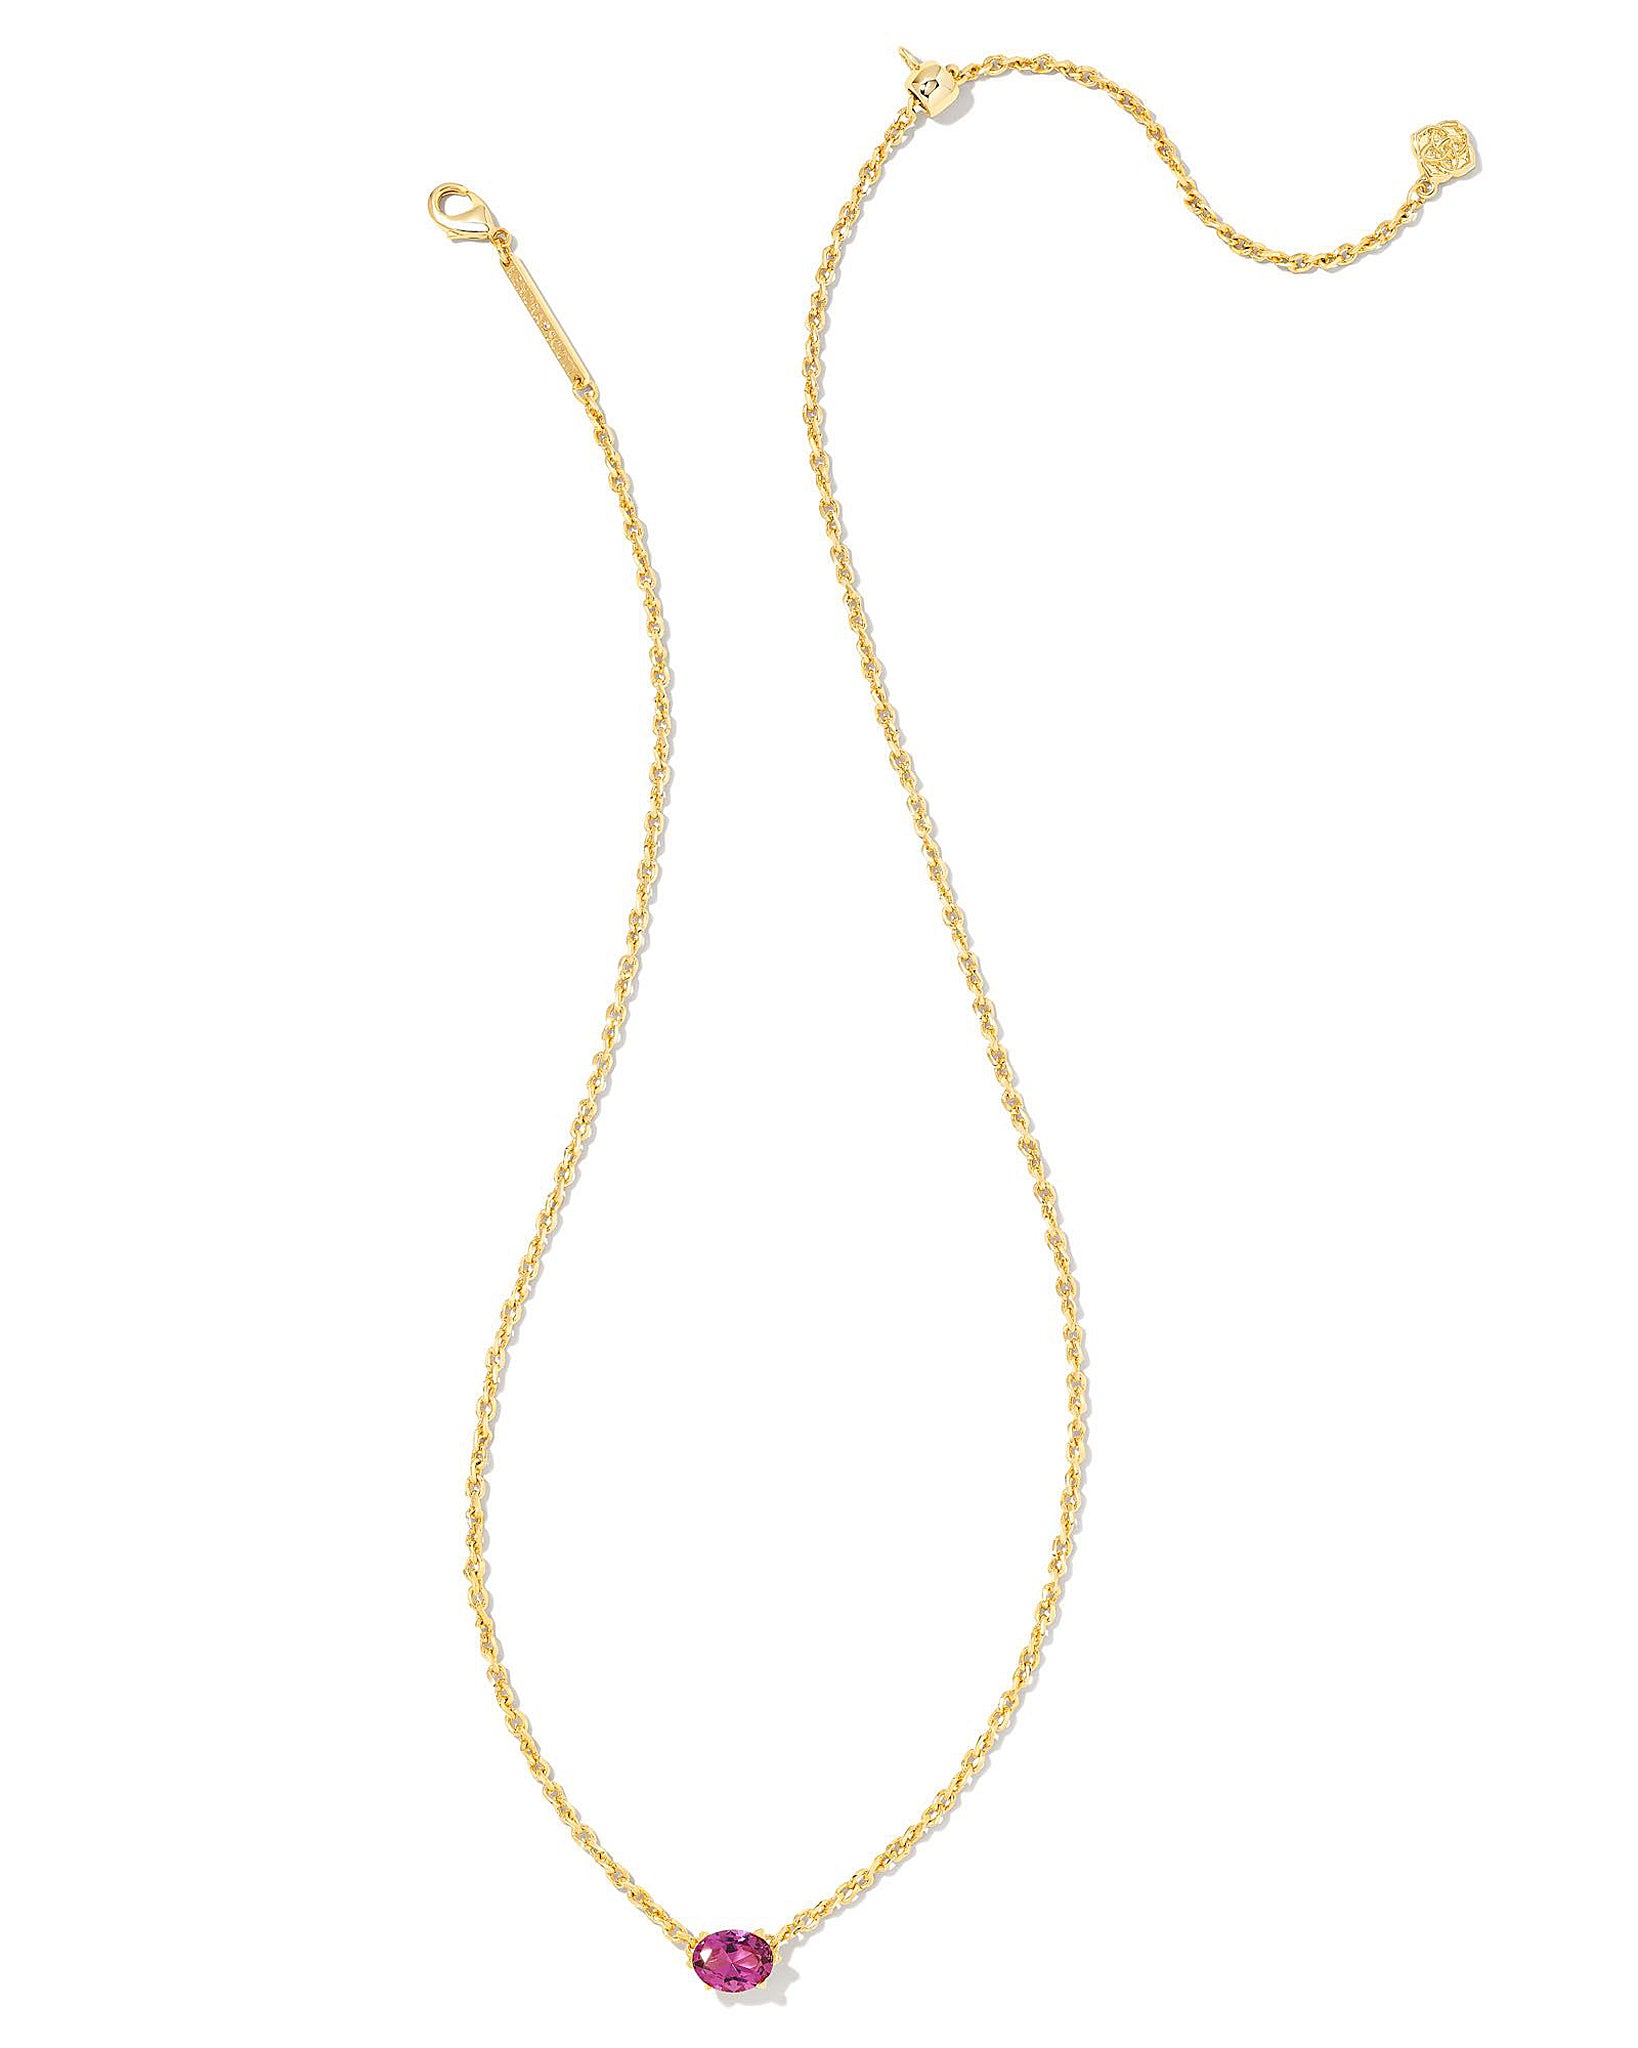 Kendra Scott Elisa Gold Pendant Necklace in Watercolor Illusion | eBay